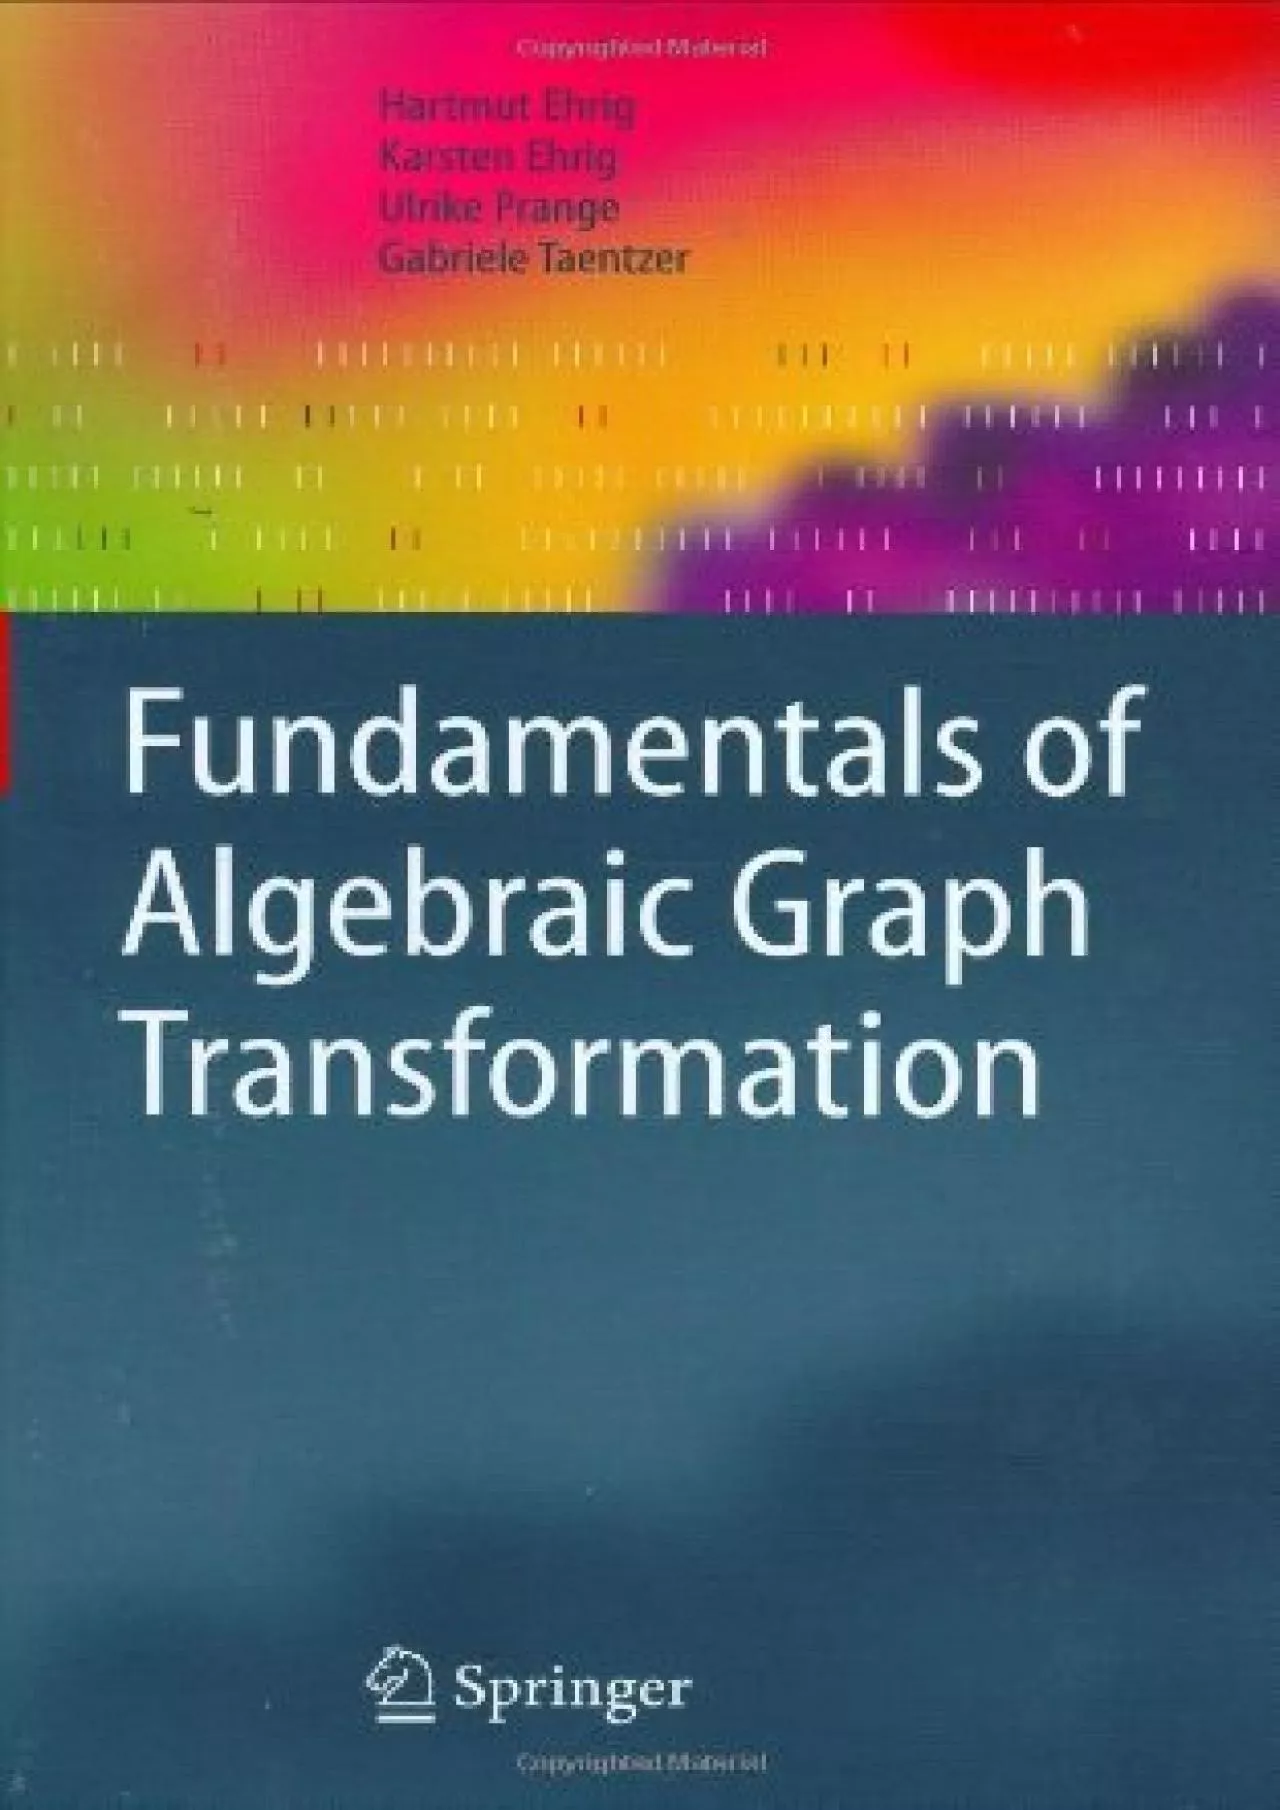 [PDF]-Fundamentals of Algebraic Graph Transformation (Monographs in Theoretical Computer